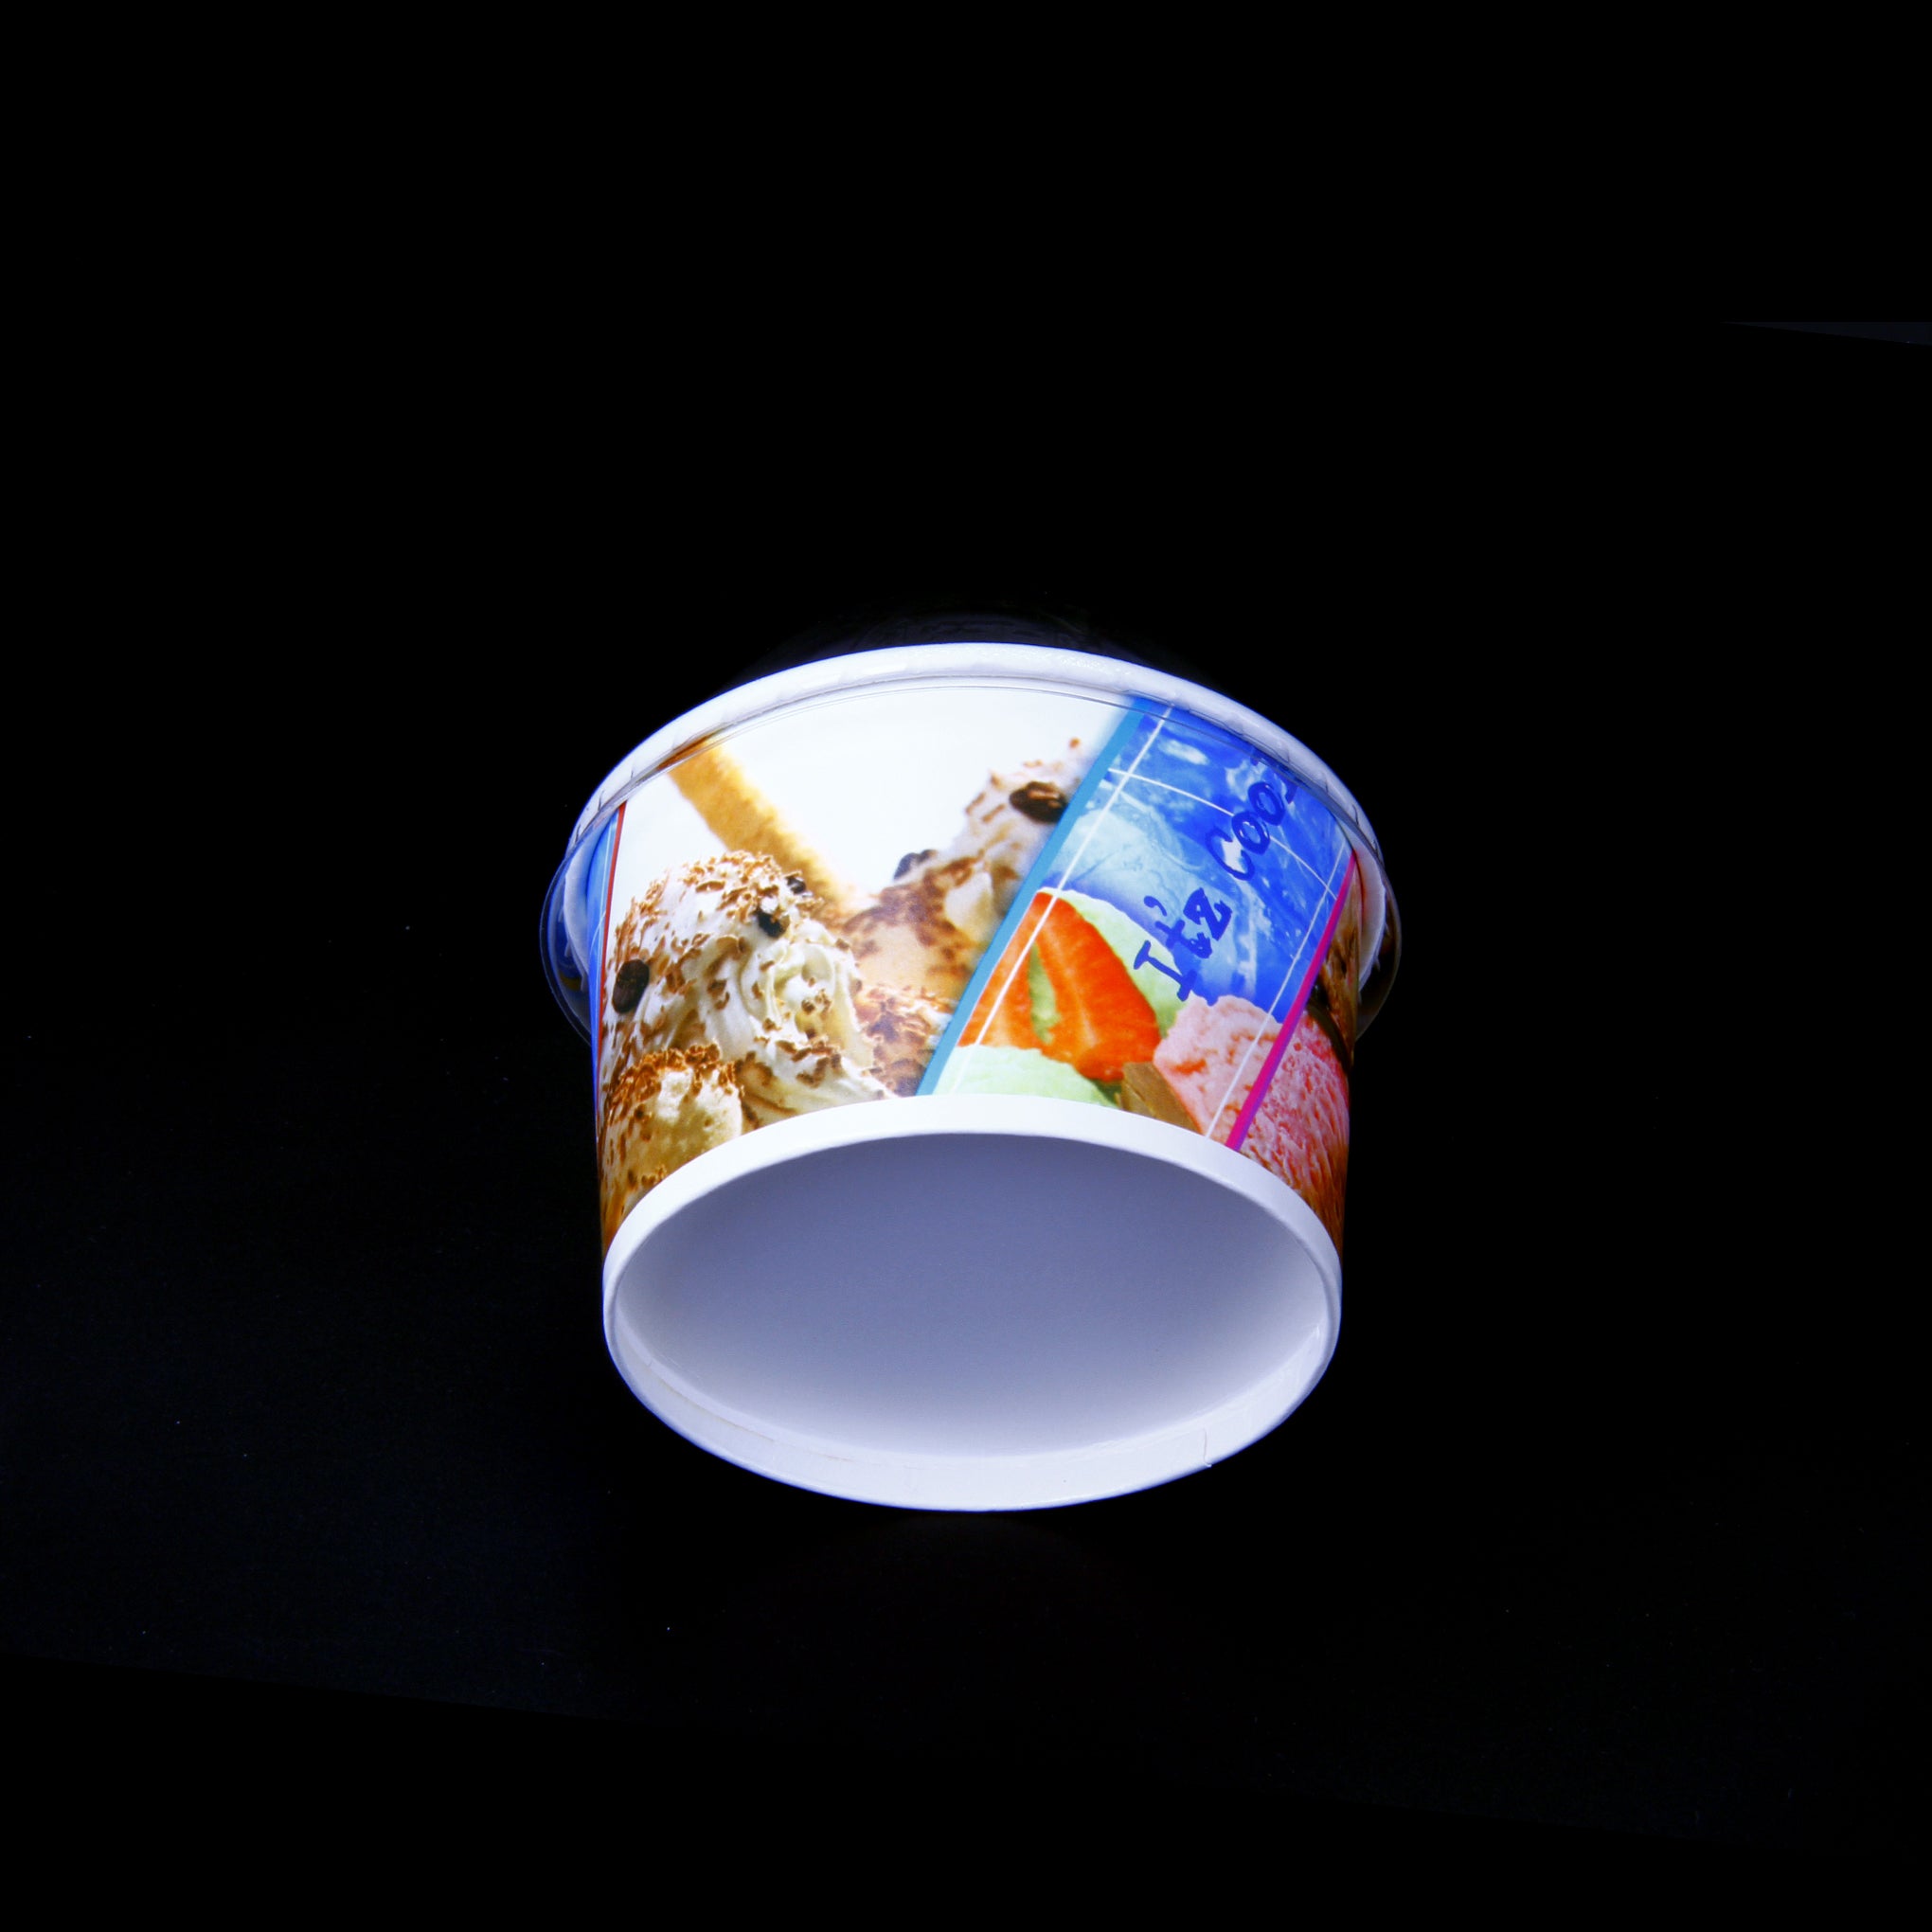 Hotpack | Paper Ice Cream Cups- 400ml (13 Oz) | 1000  Pieces - Hotpack Bahrain